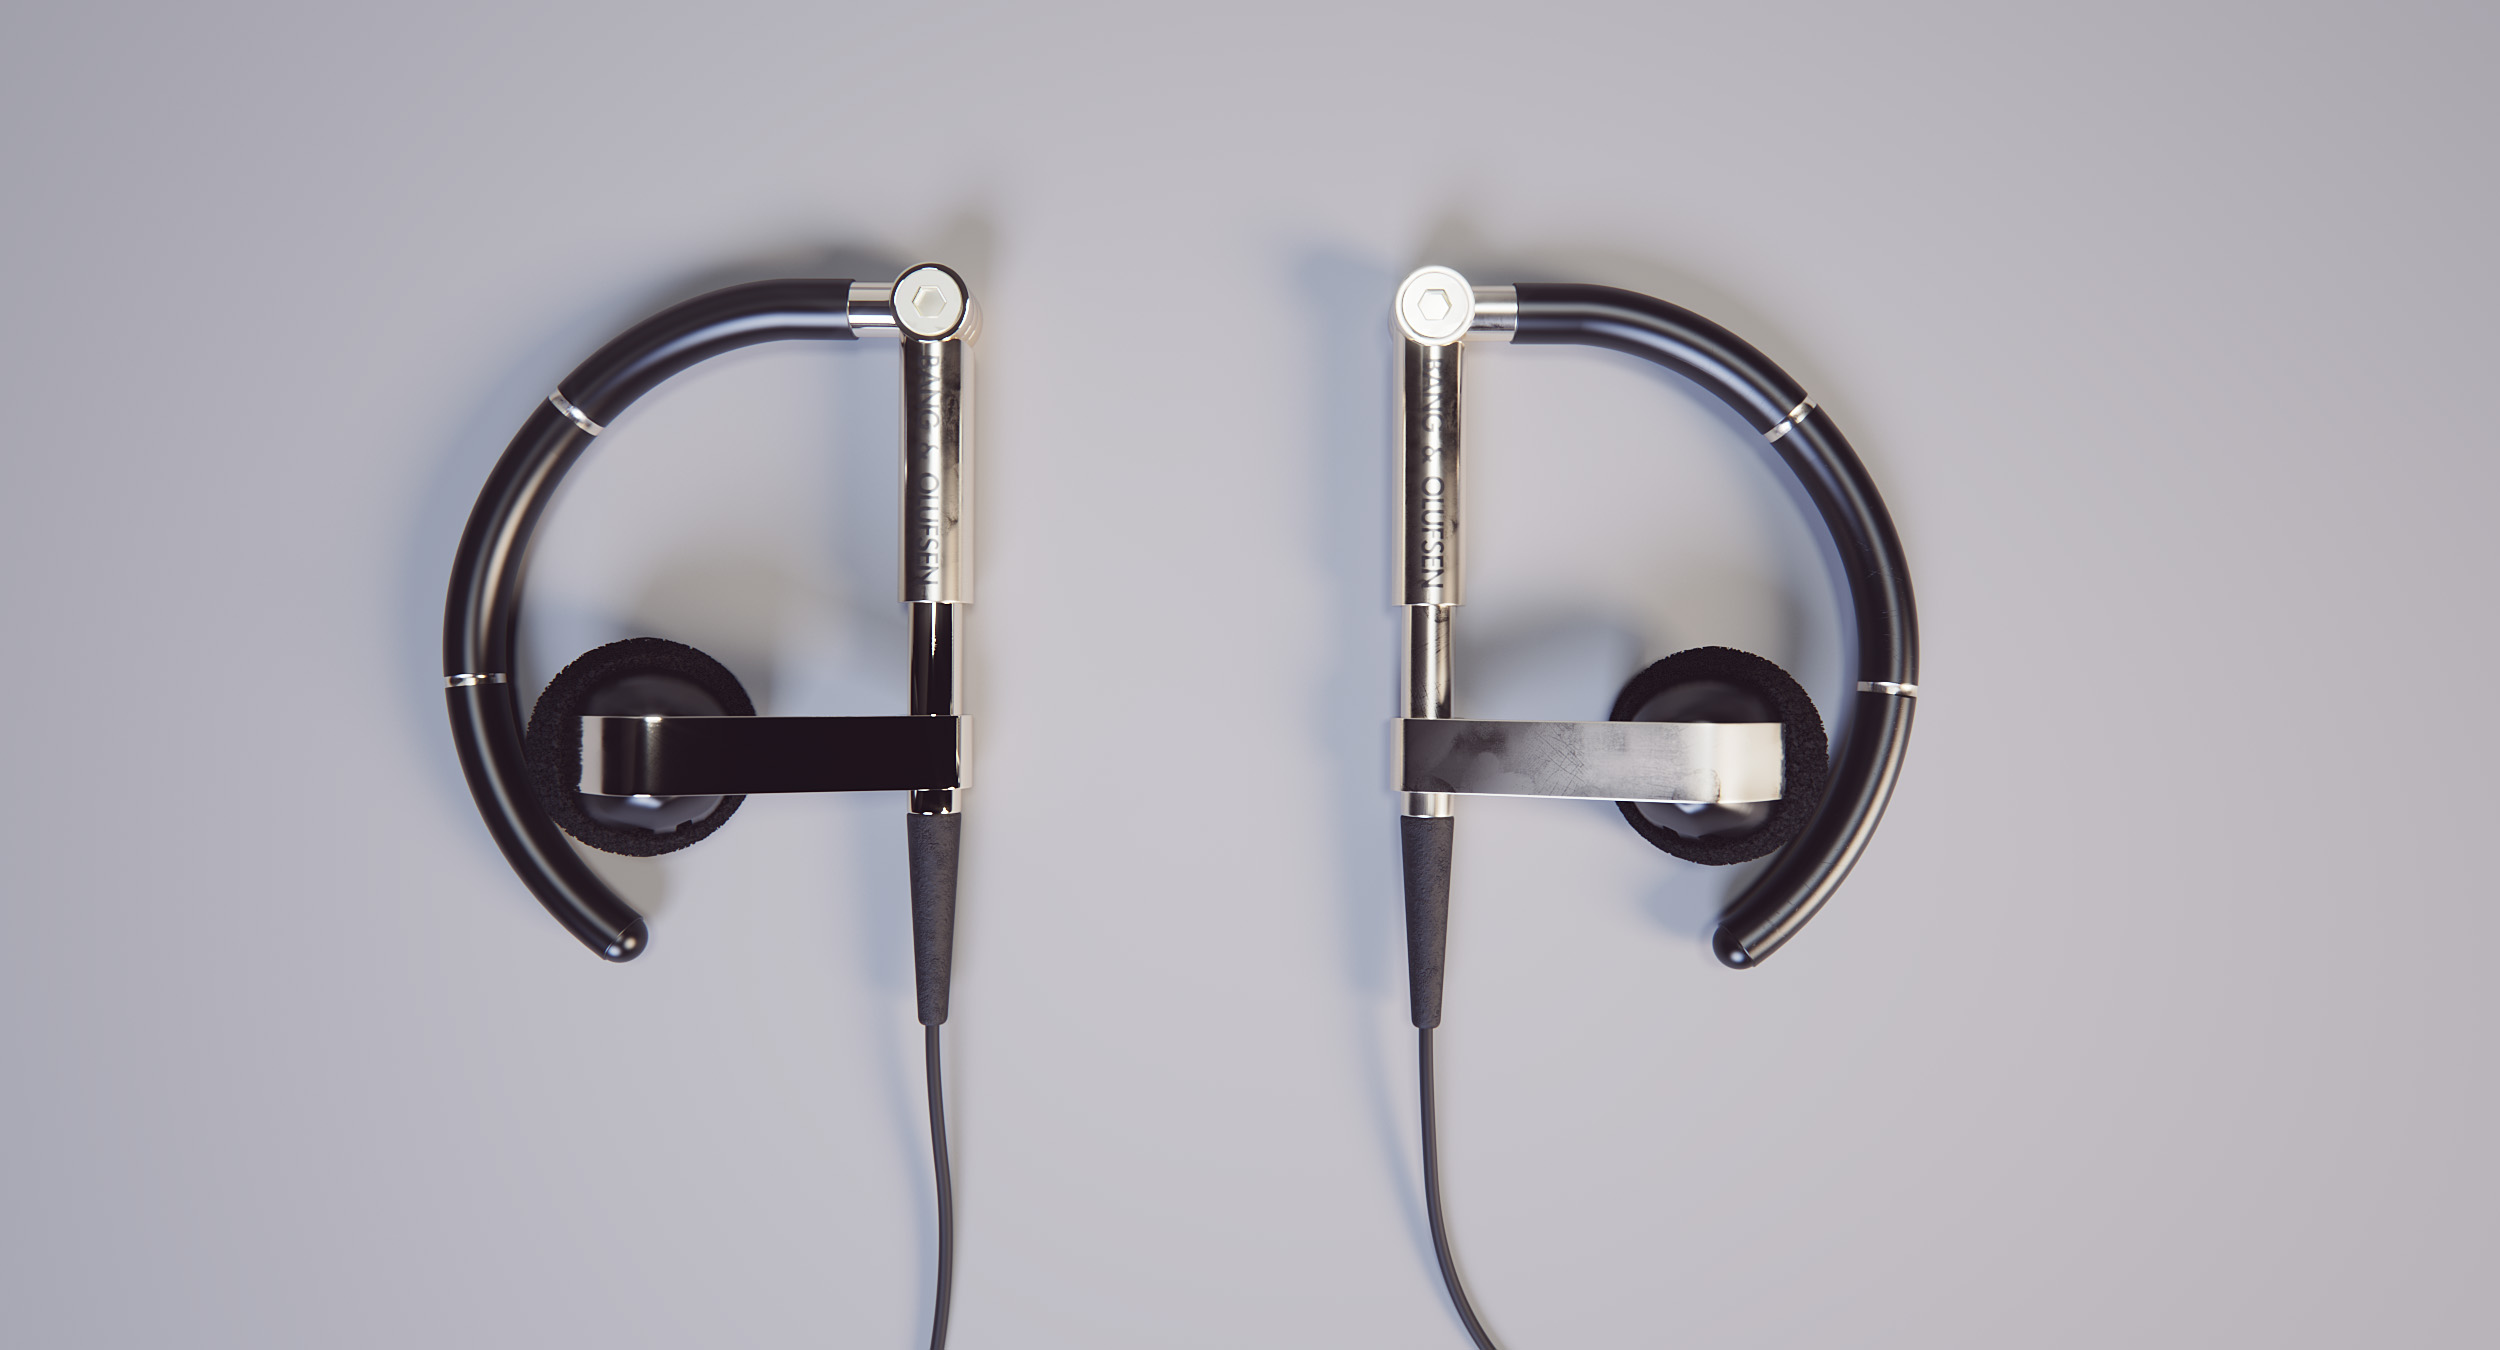 3D-Animation der Bang & Olufsen A8 Kopfhörer